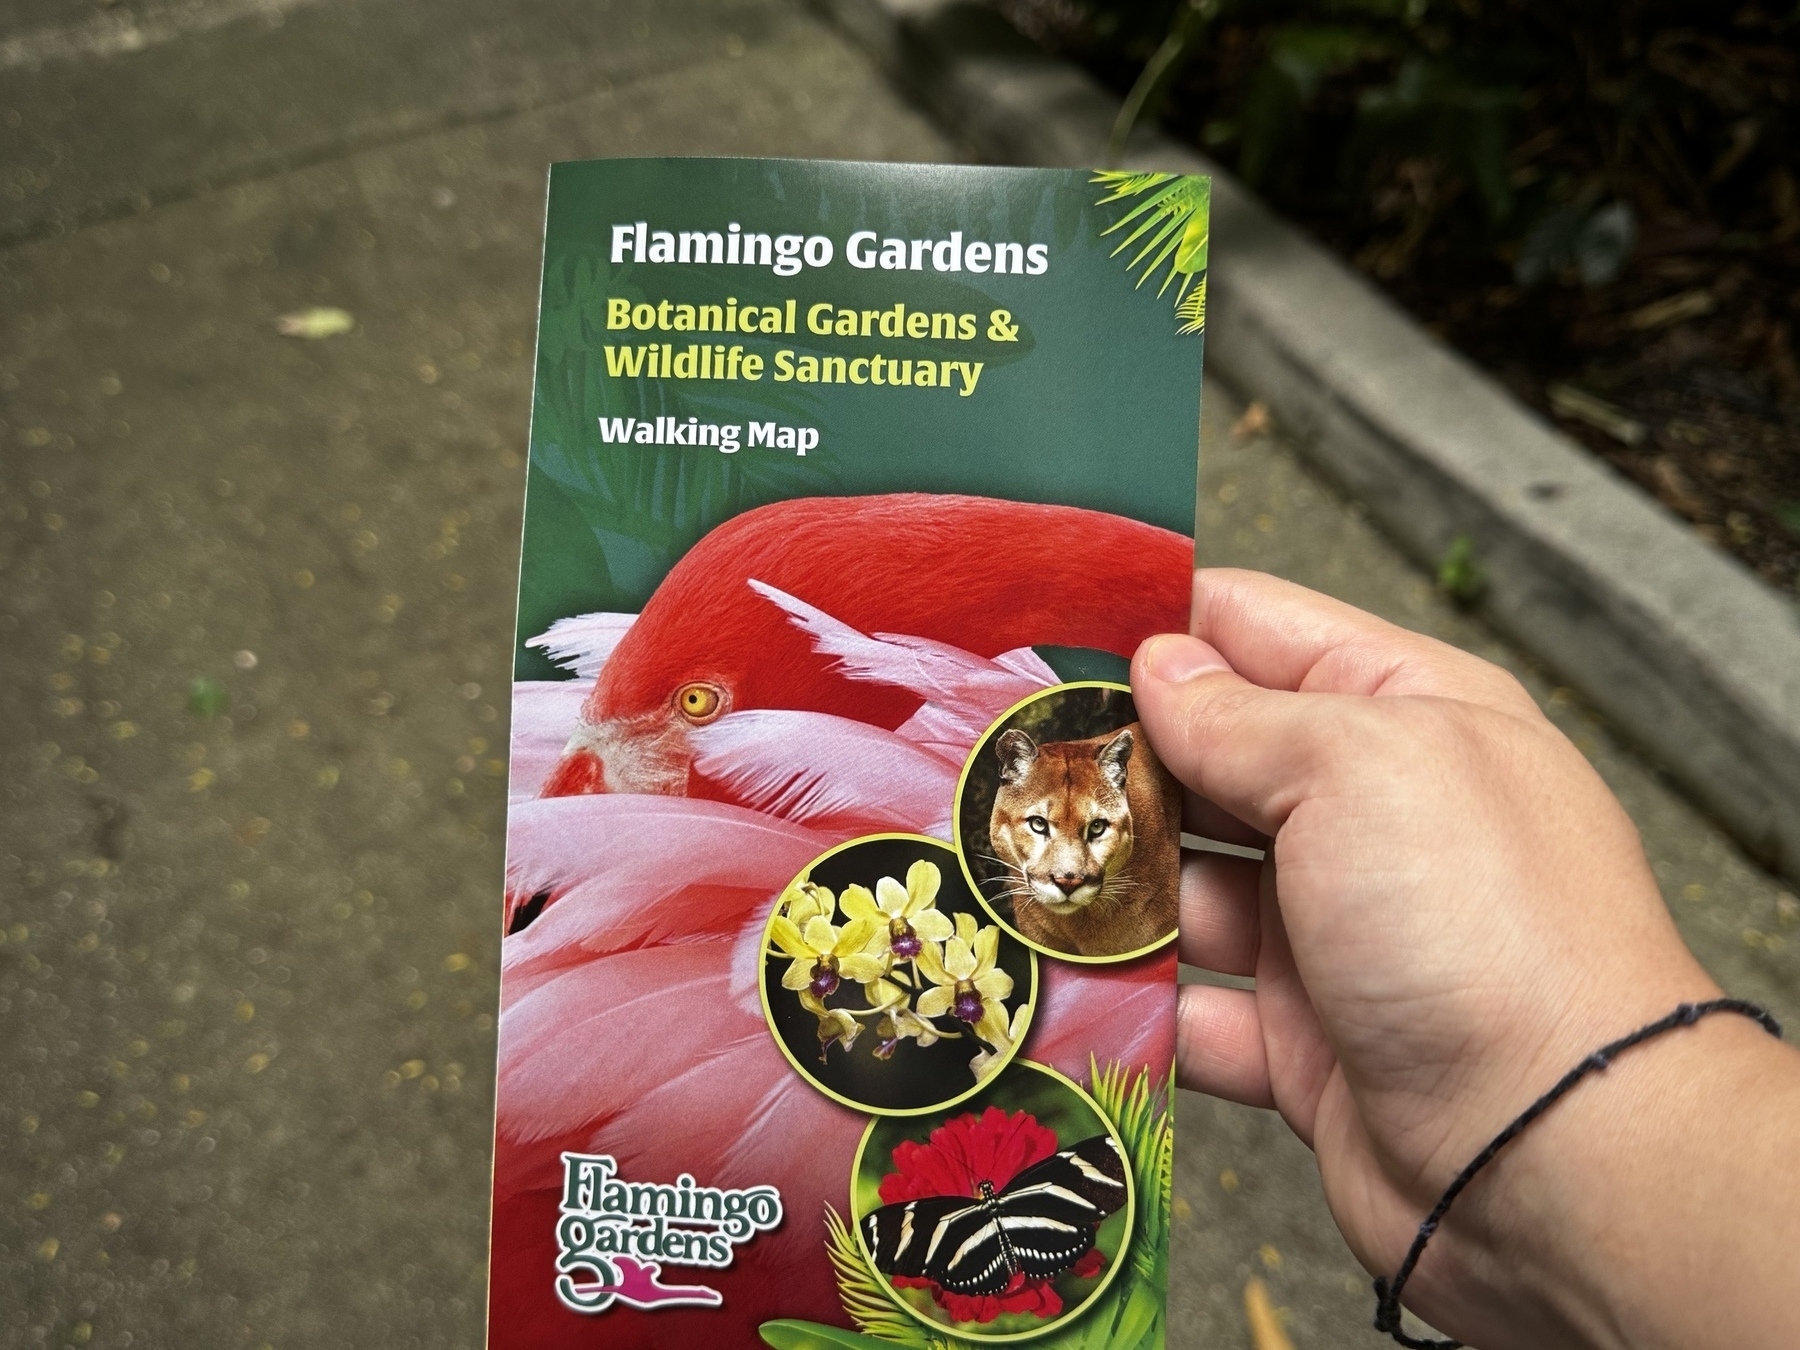 Flamingo Gardens&10;Botanical Gardens & Wildlife Sanctuary&10;Walking brochure and map